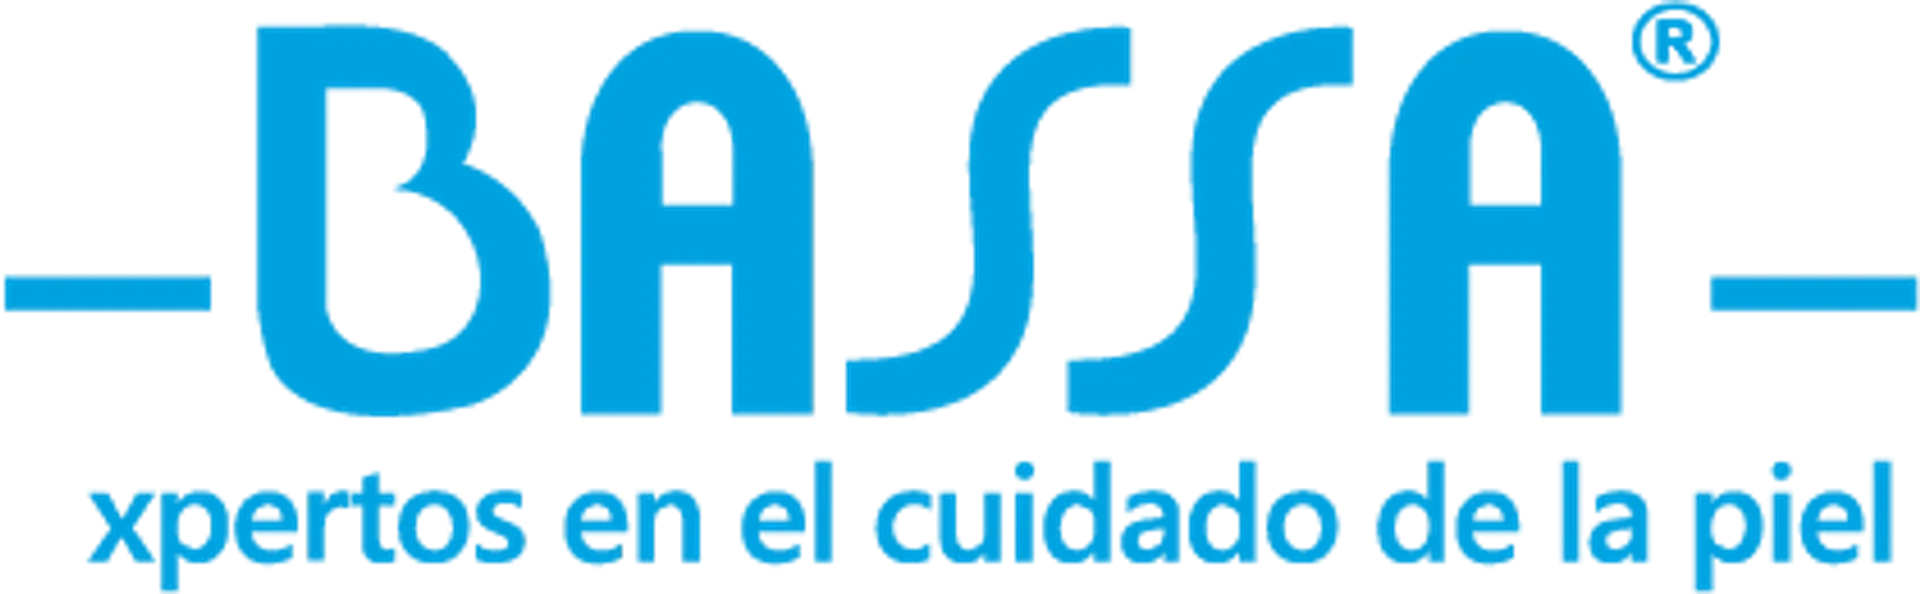 BASSA logo de catálogo